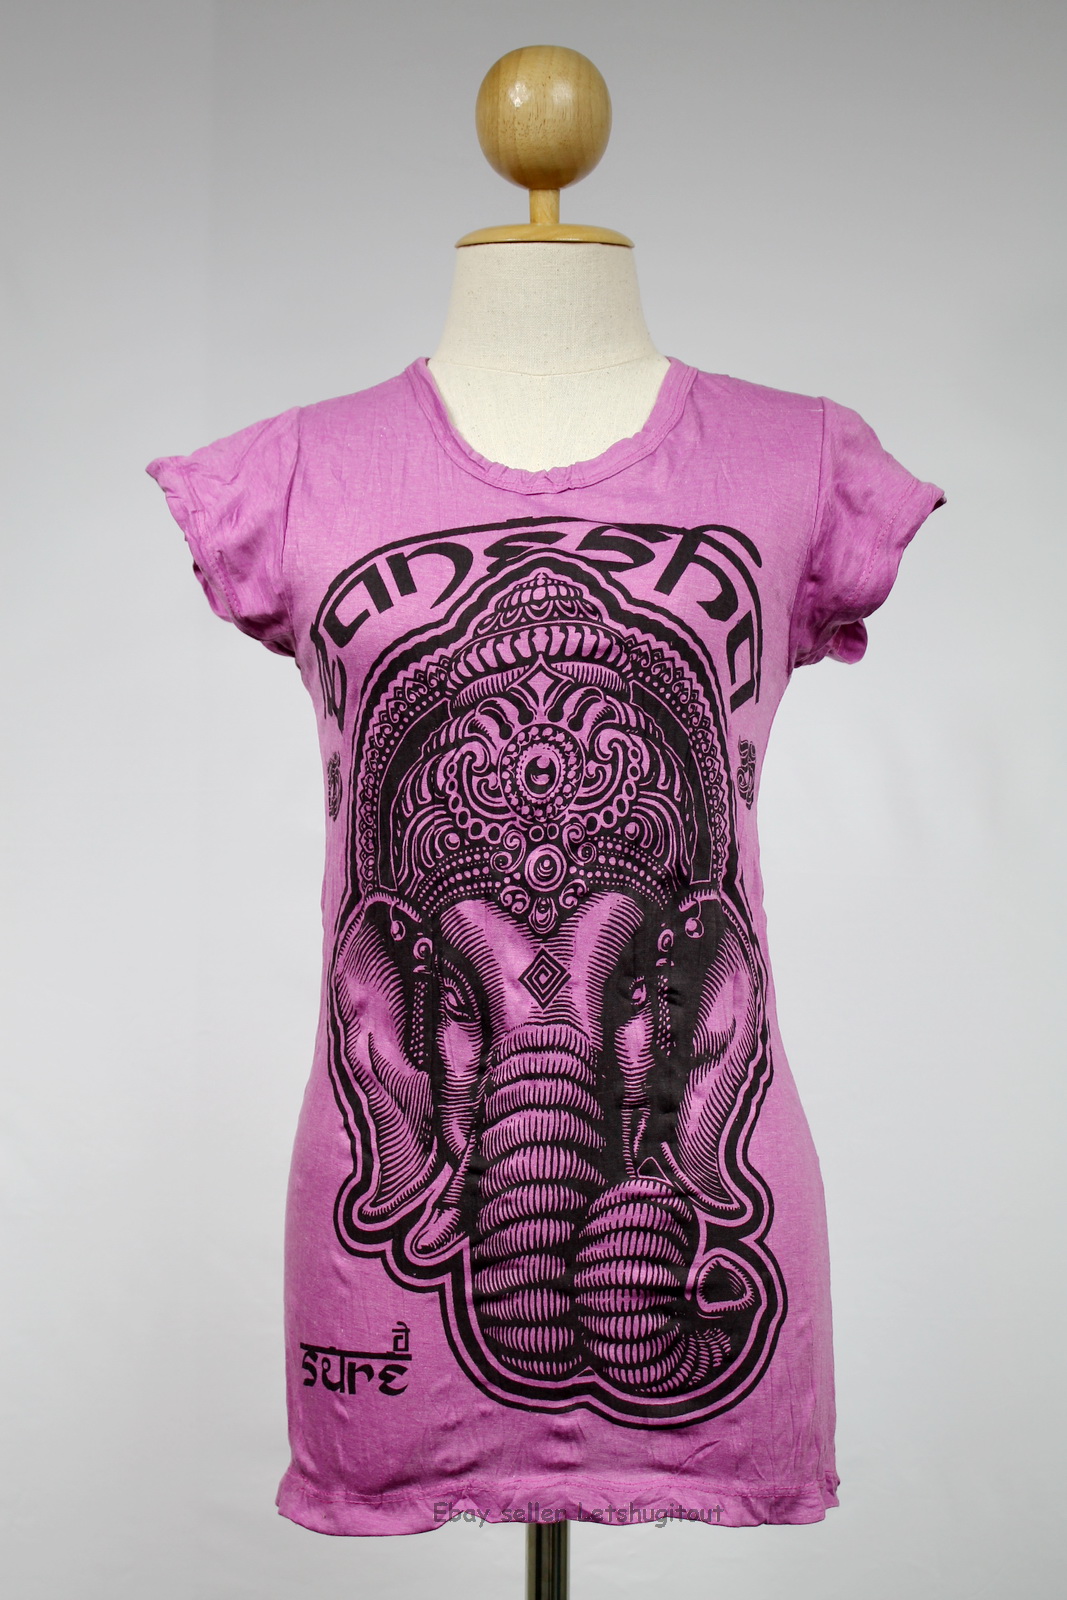 Ganesha T-shirt Yoga Top Hindu God Boho Hippie Purple S M L Xl